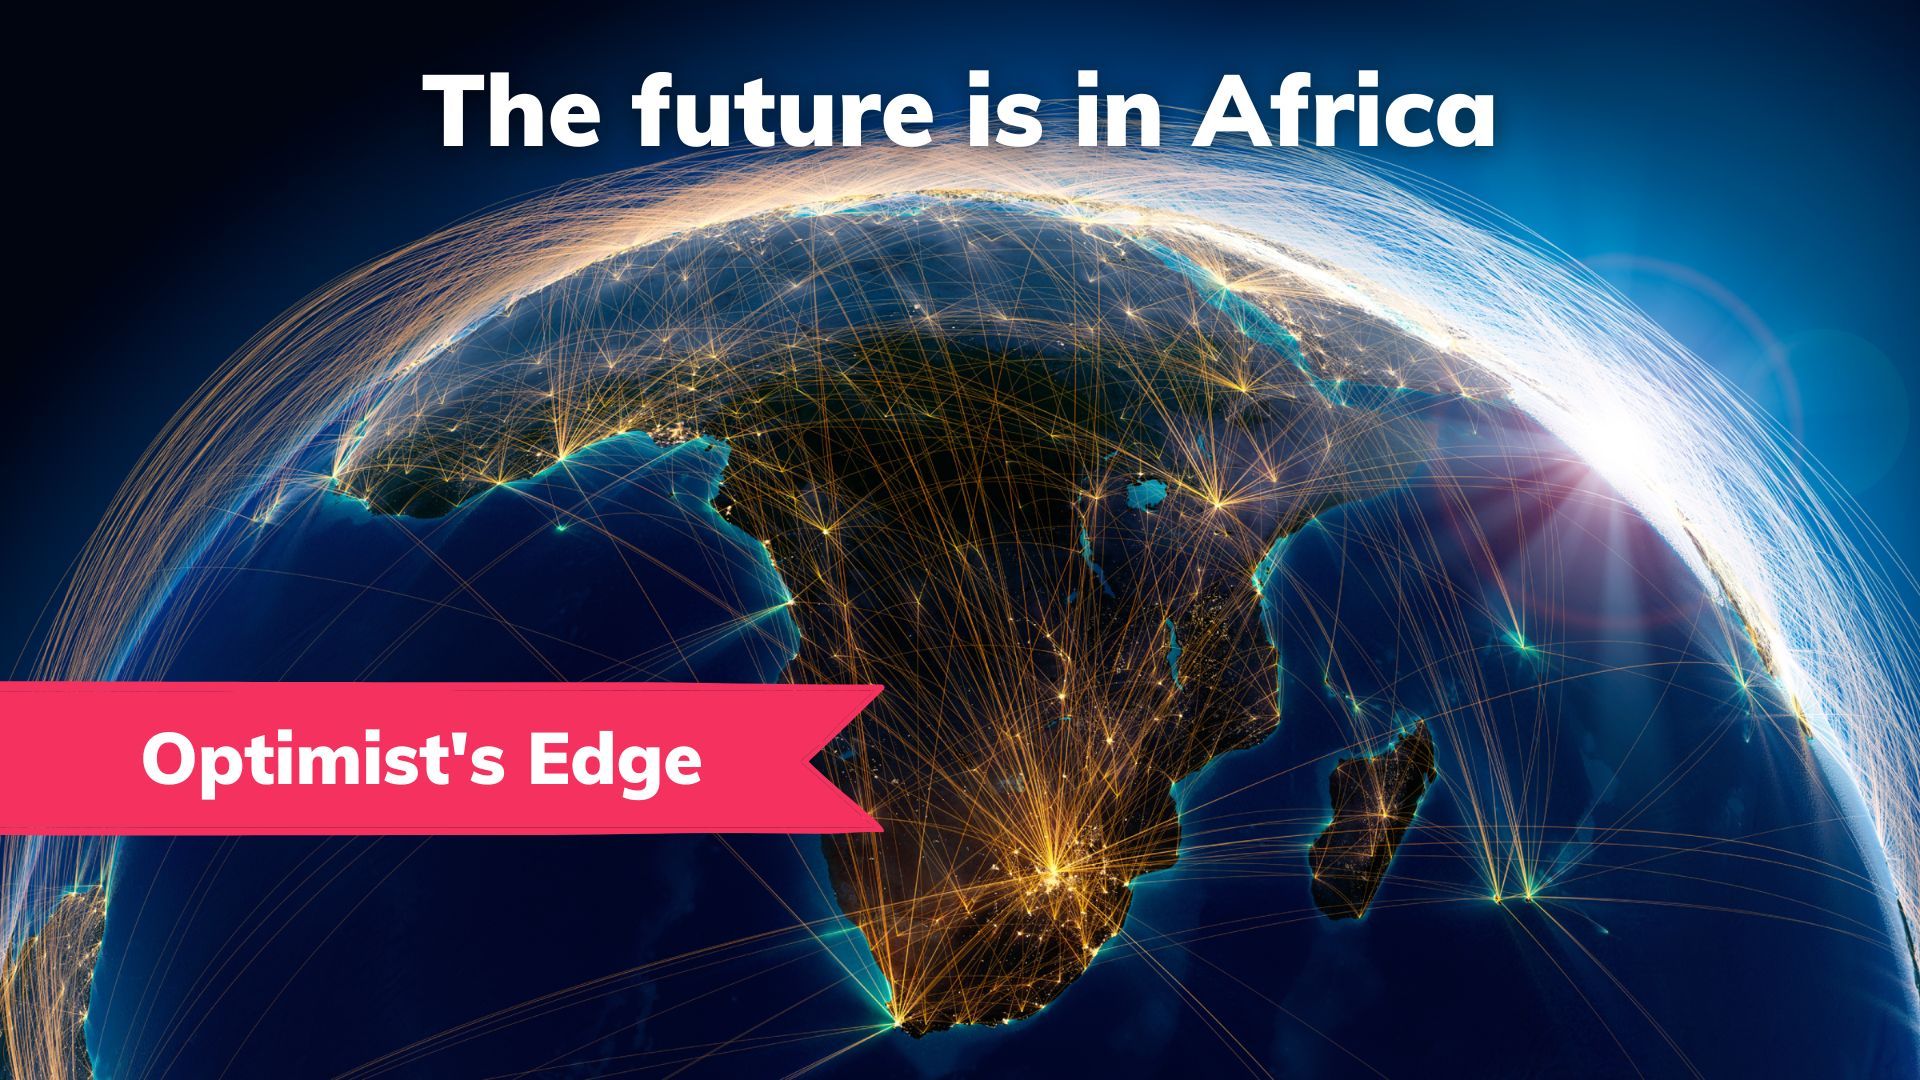 💡 Optimist's Edge: Africa's fast track to prosperity